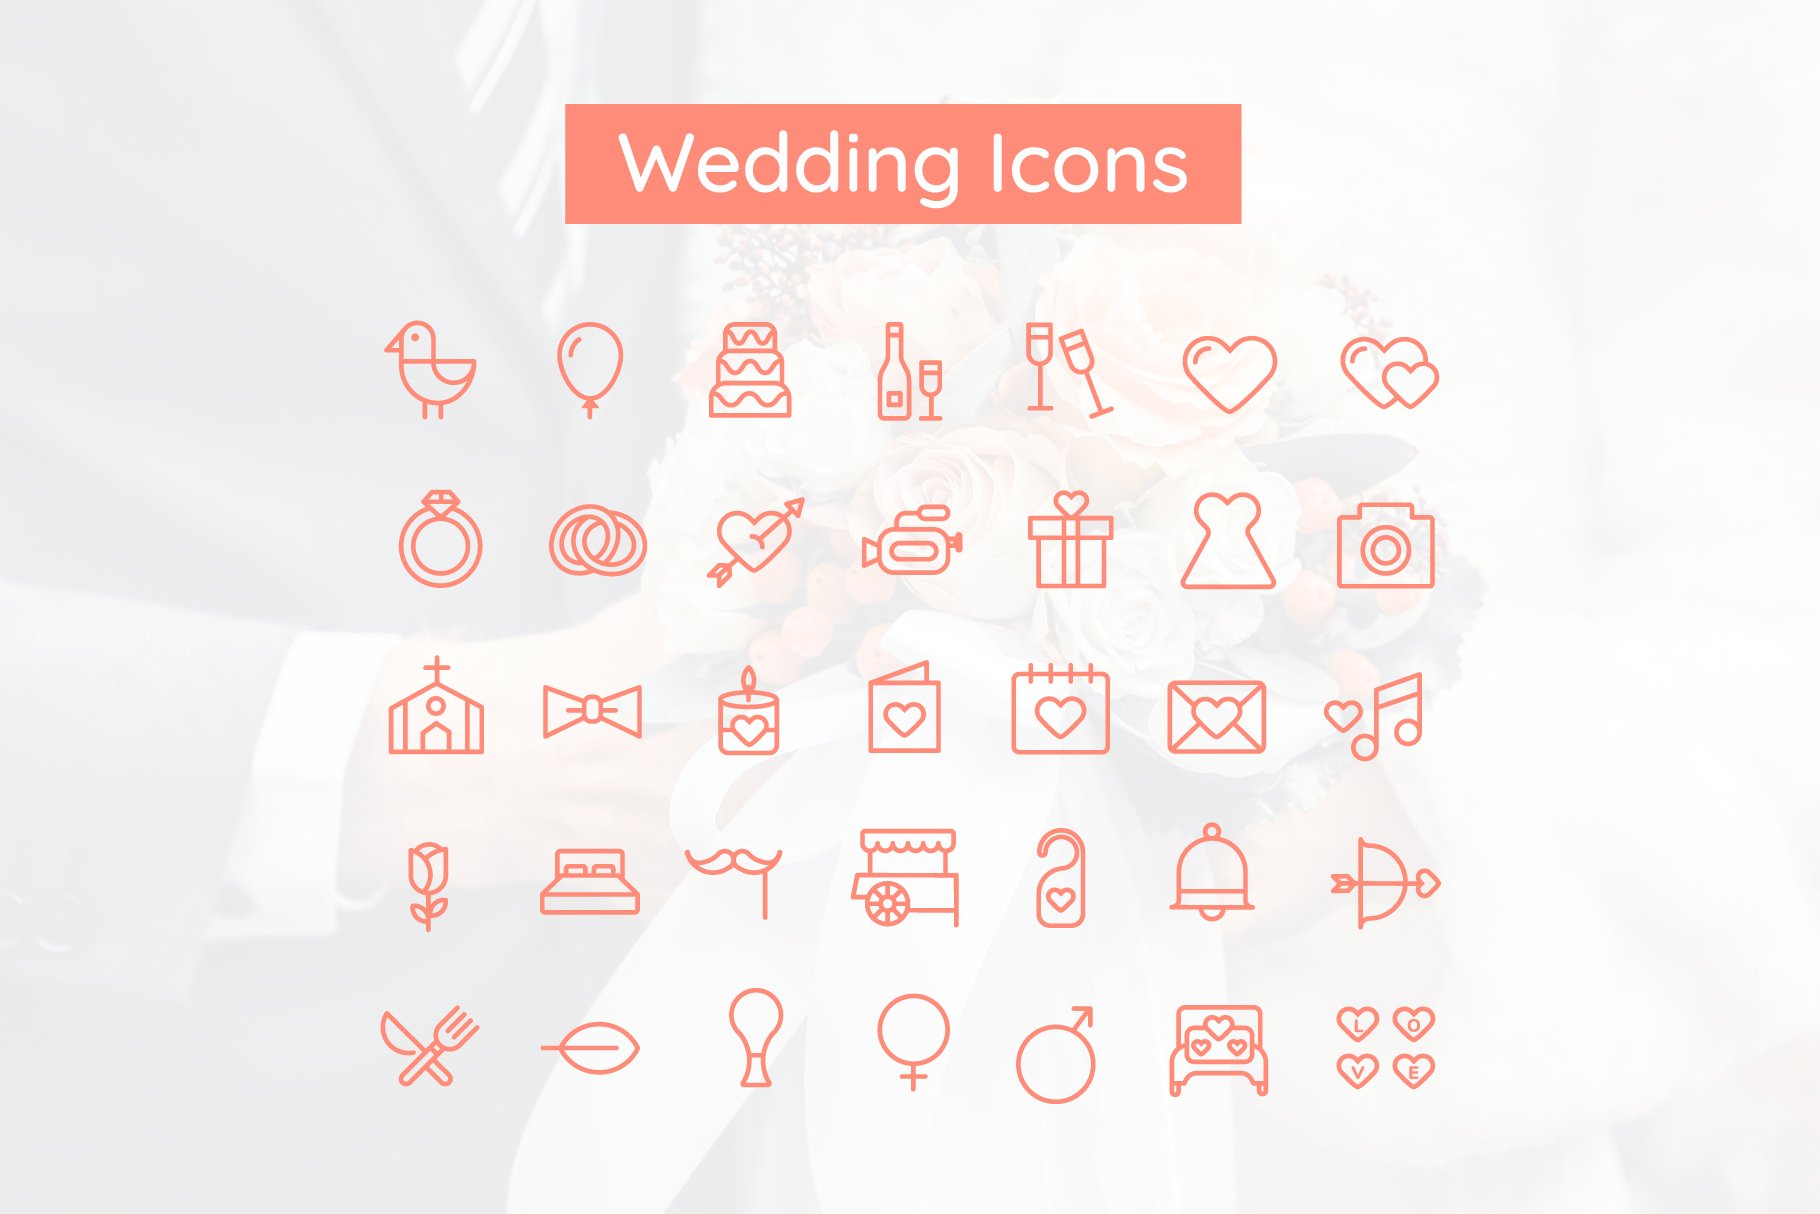 Wedding & Valentine Icon Set cover image.